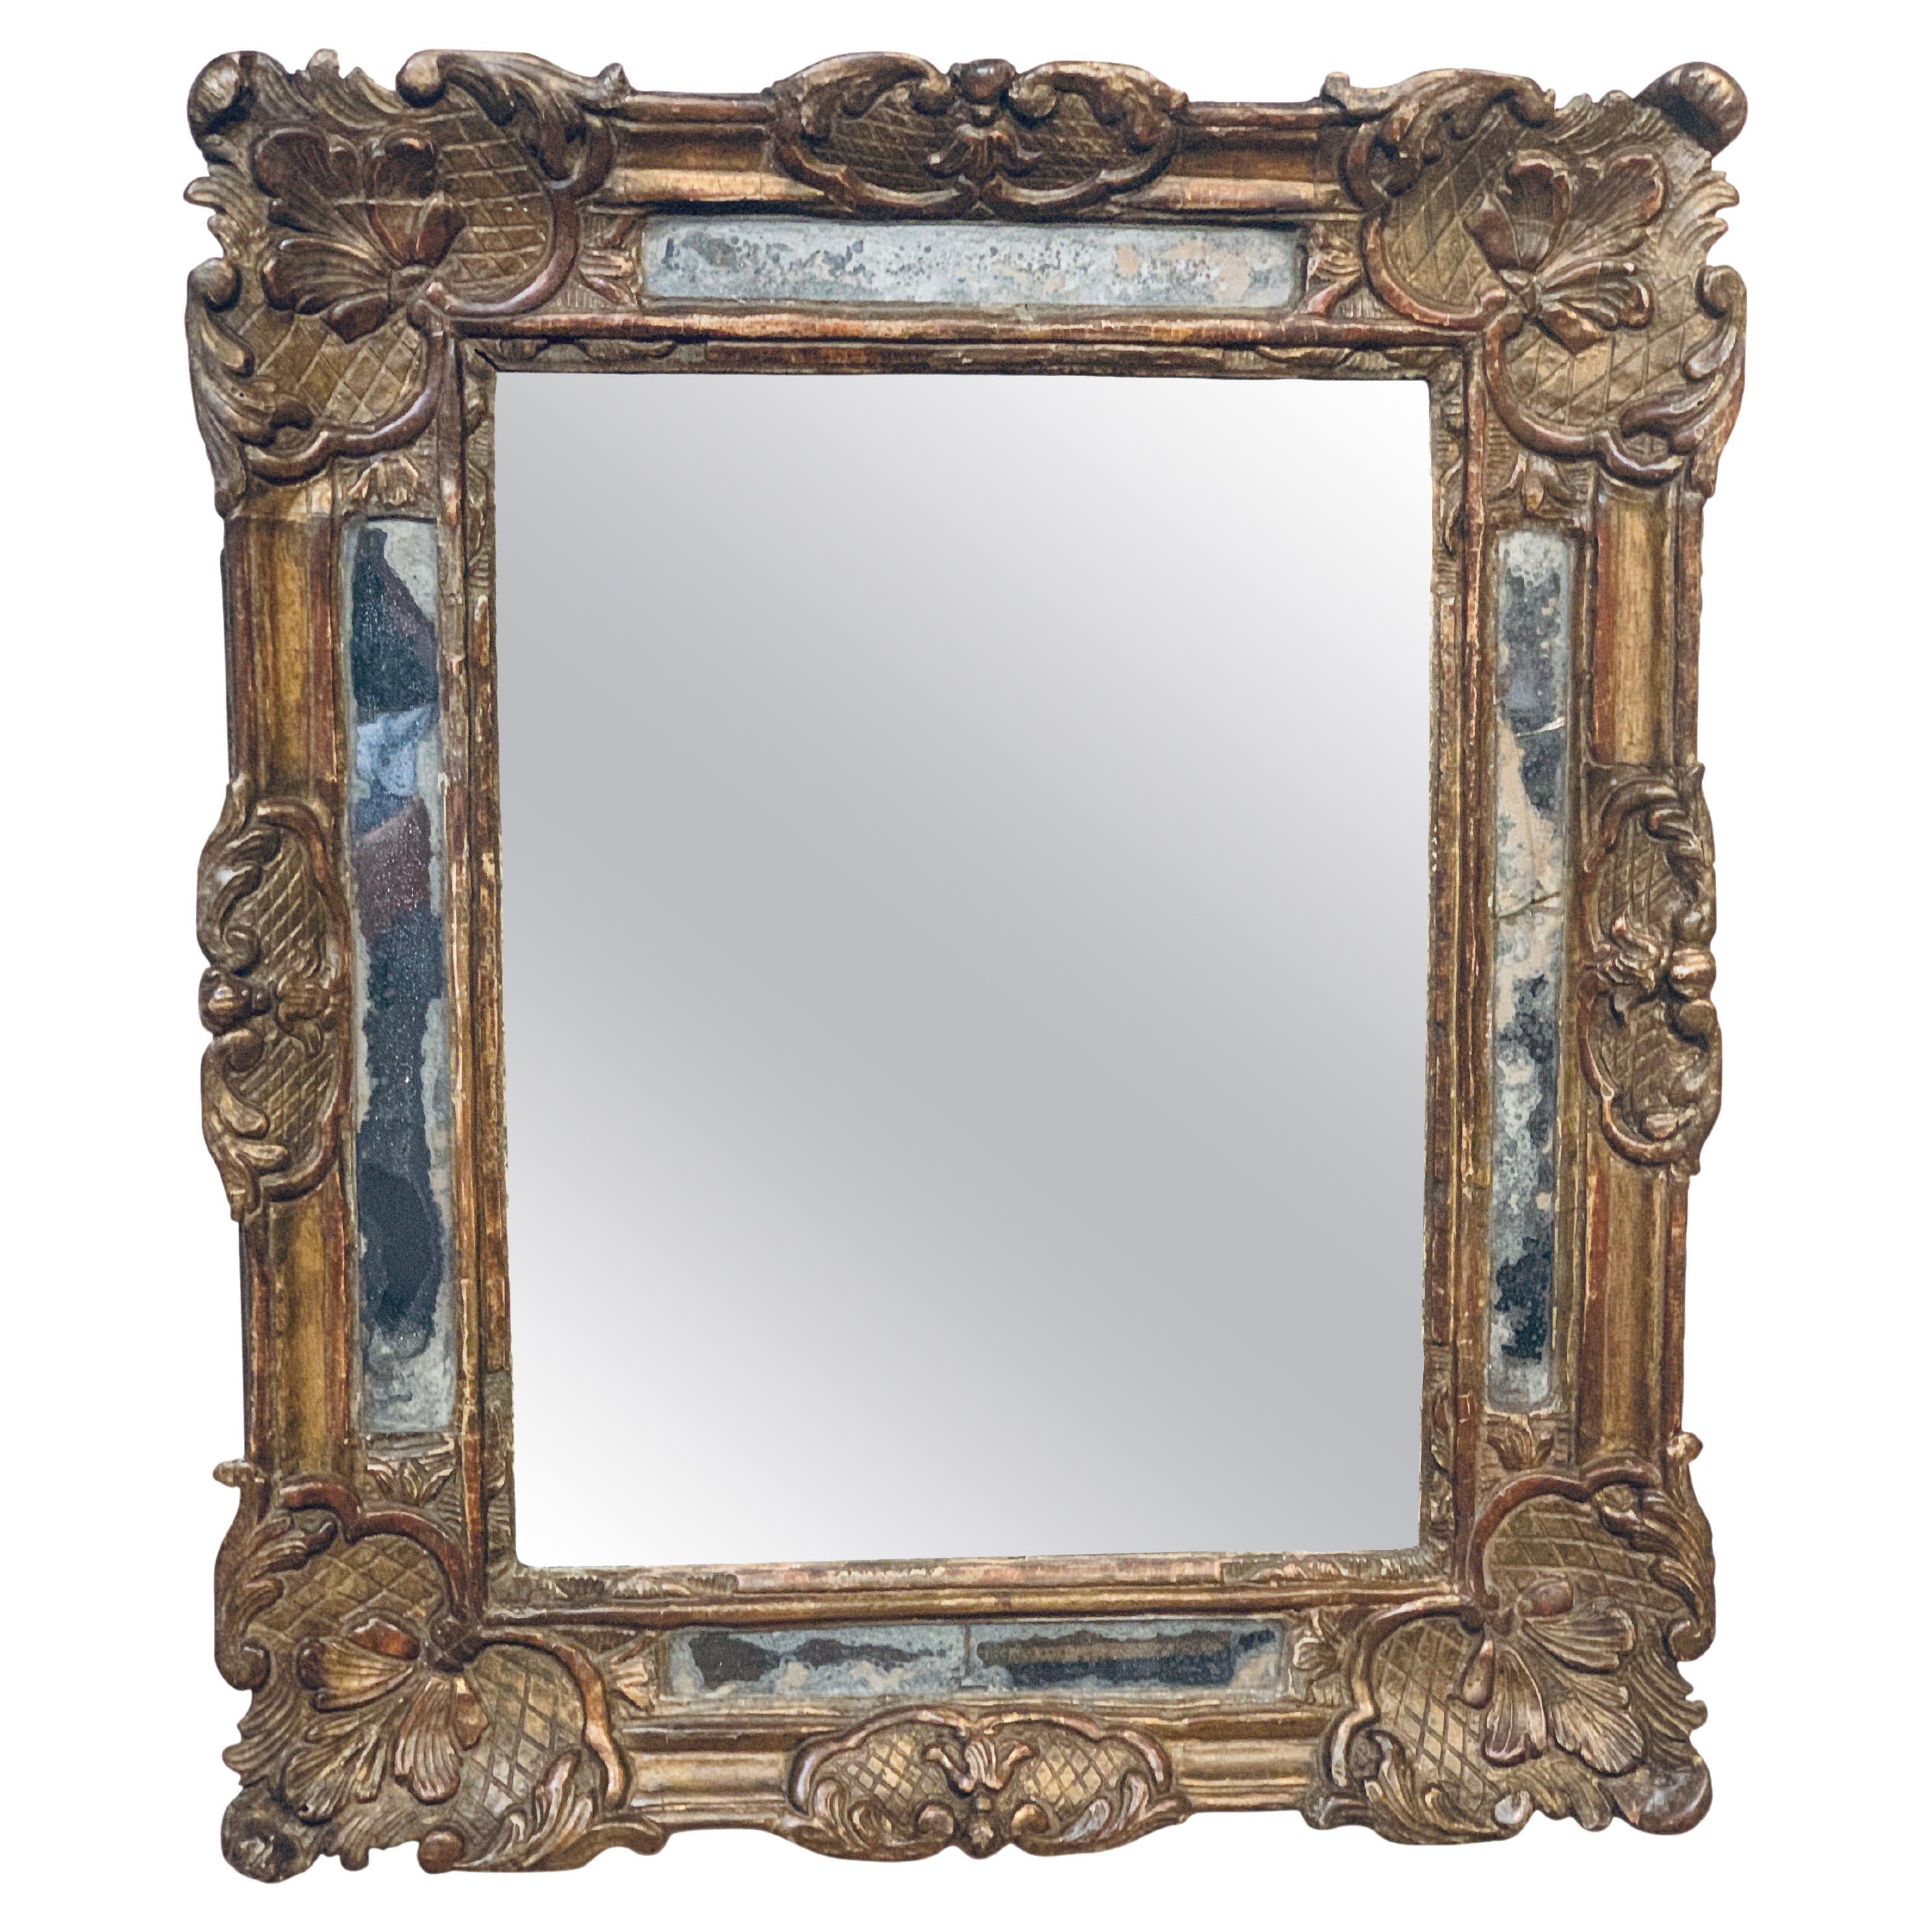 Louis XV Carved and Gilt Mirror, Circa 1765-70